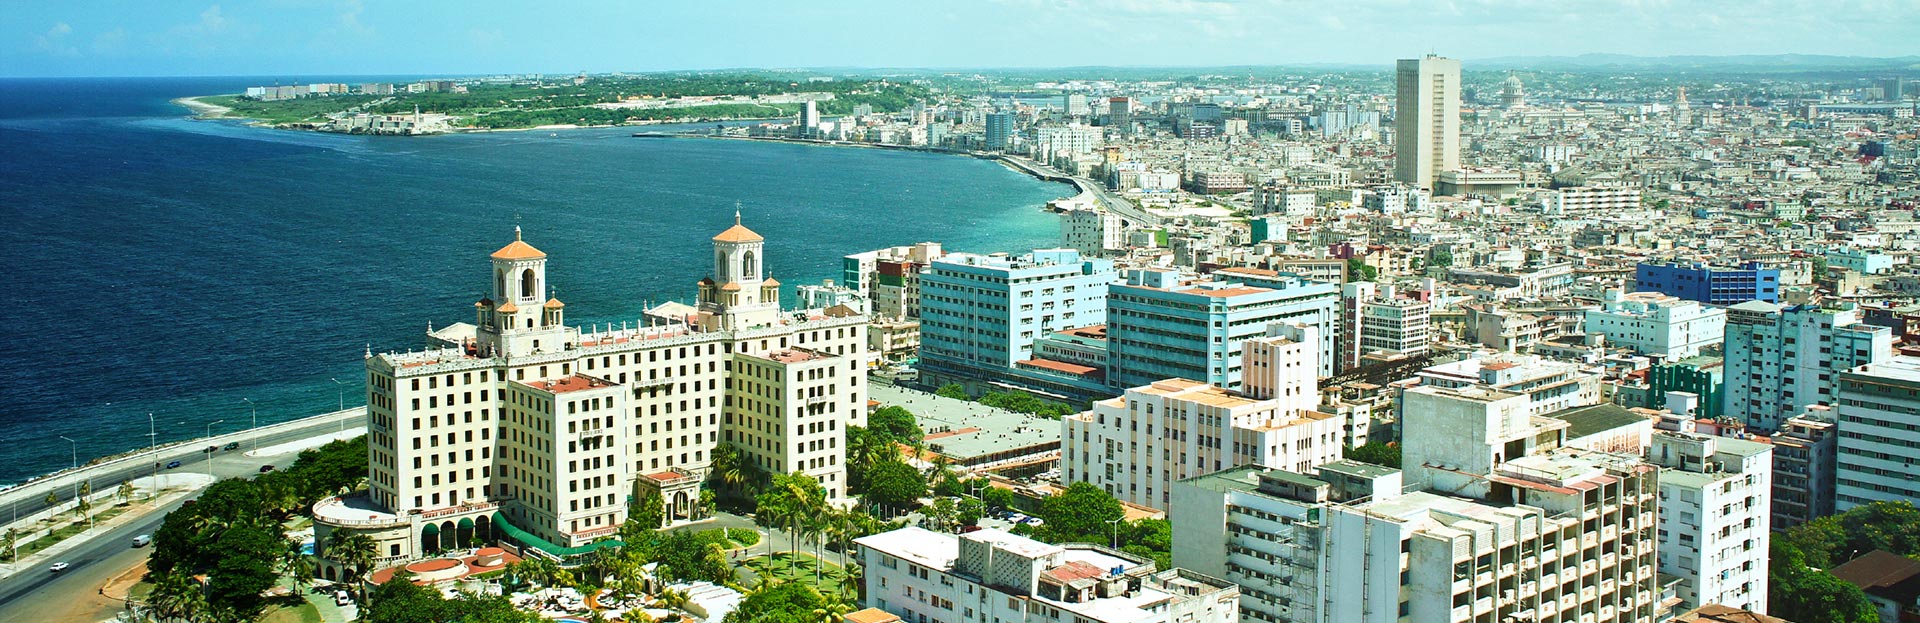 Cuba Havana Cityscape